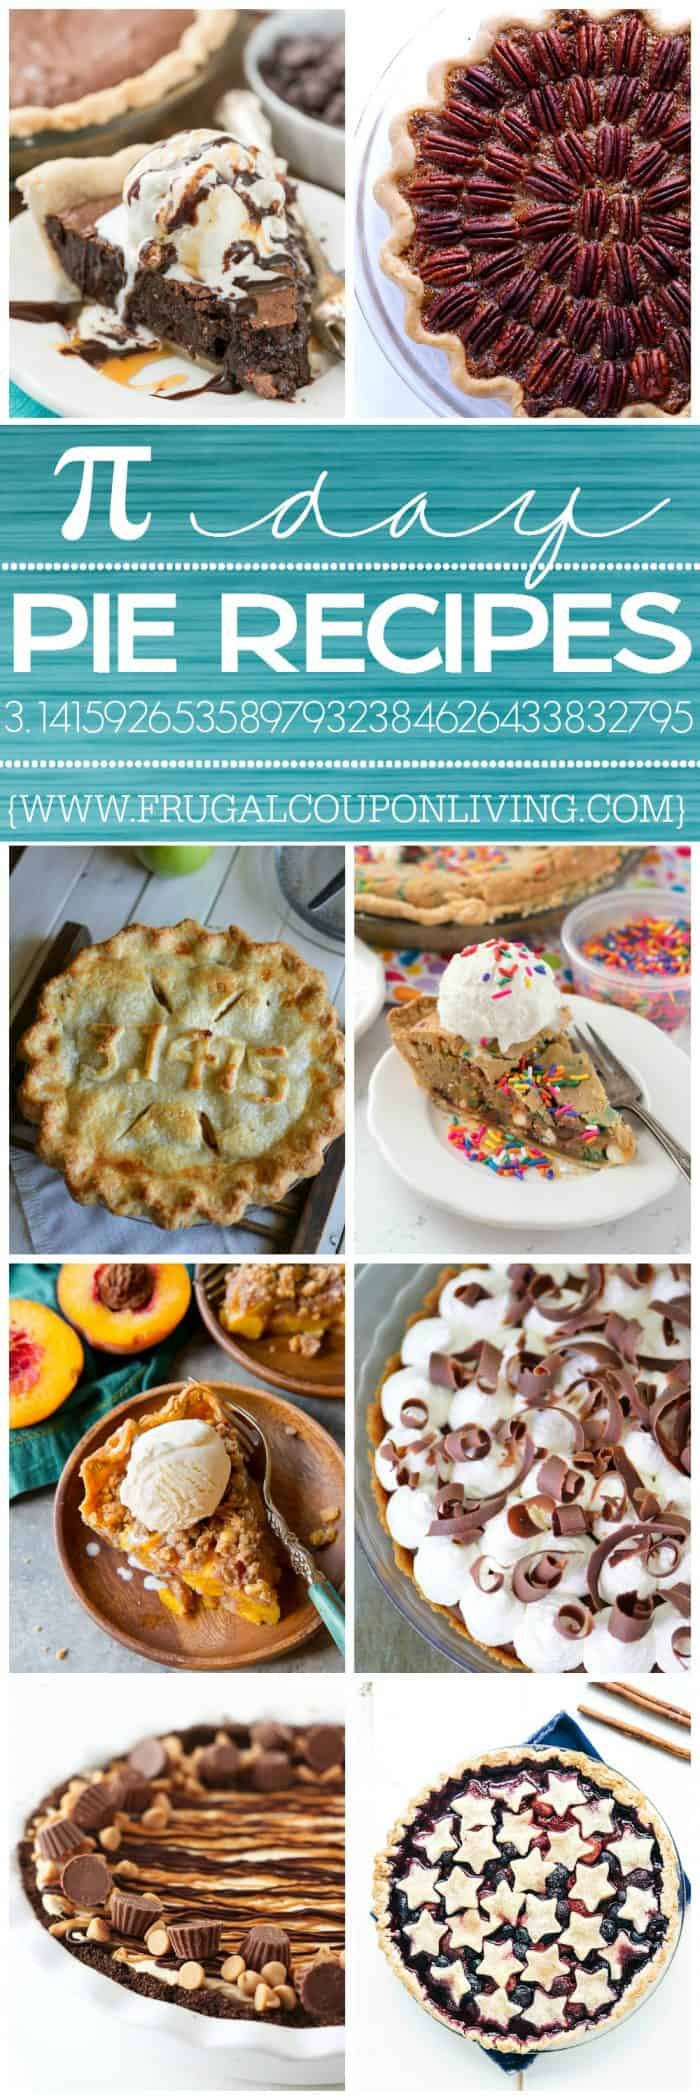 Pi Day Dessert Ideas
 Pi Day Recipes Pie Ideas for March 14th